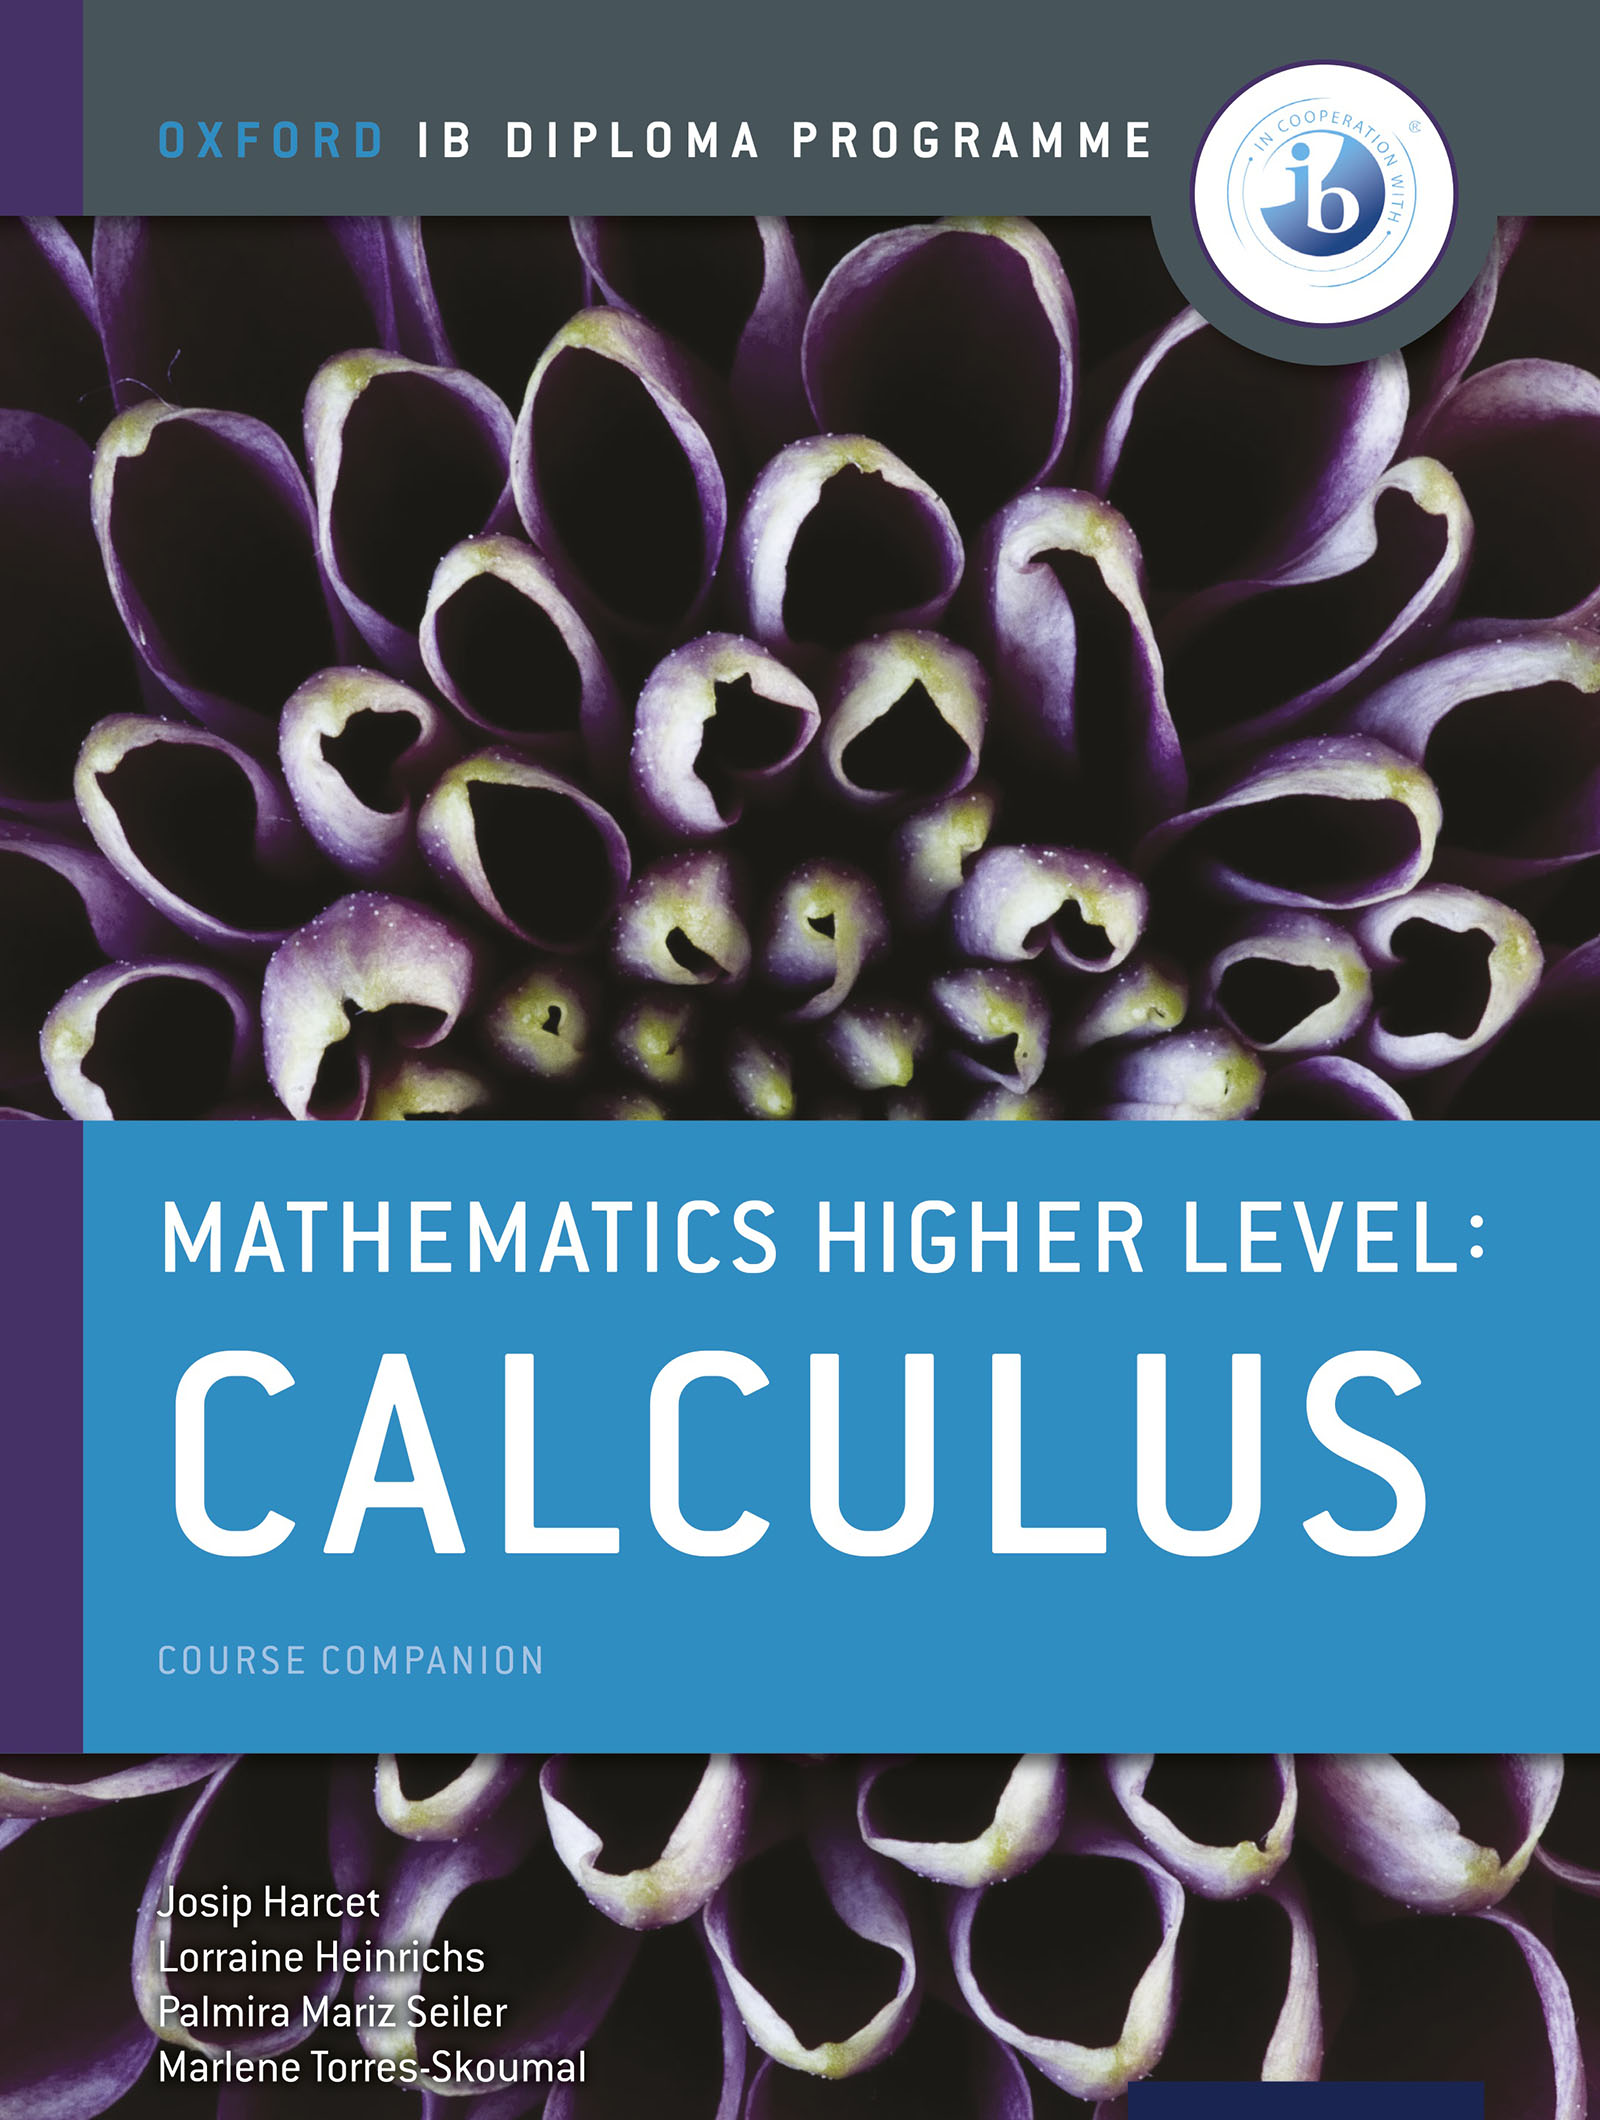 Oxford IB Diploma Programme: Mathematics Higher Level: Calculus Course Companion